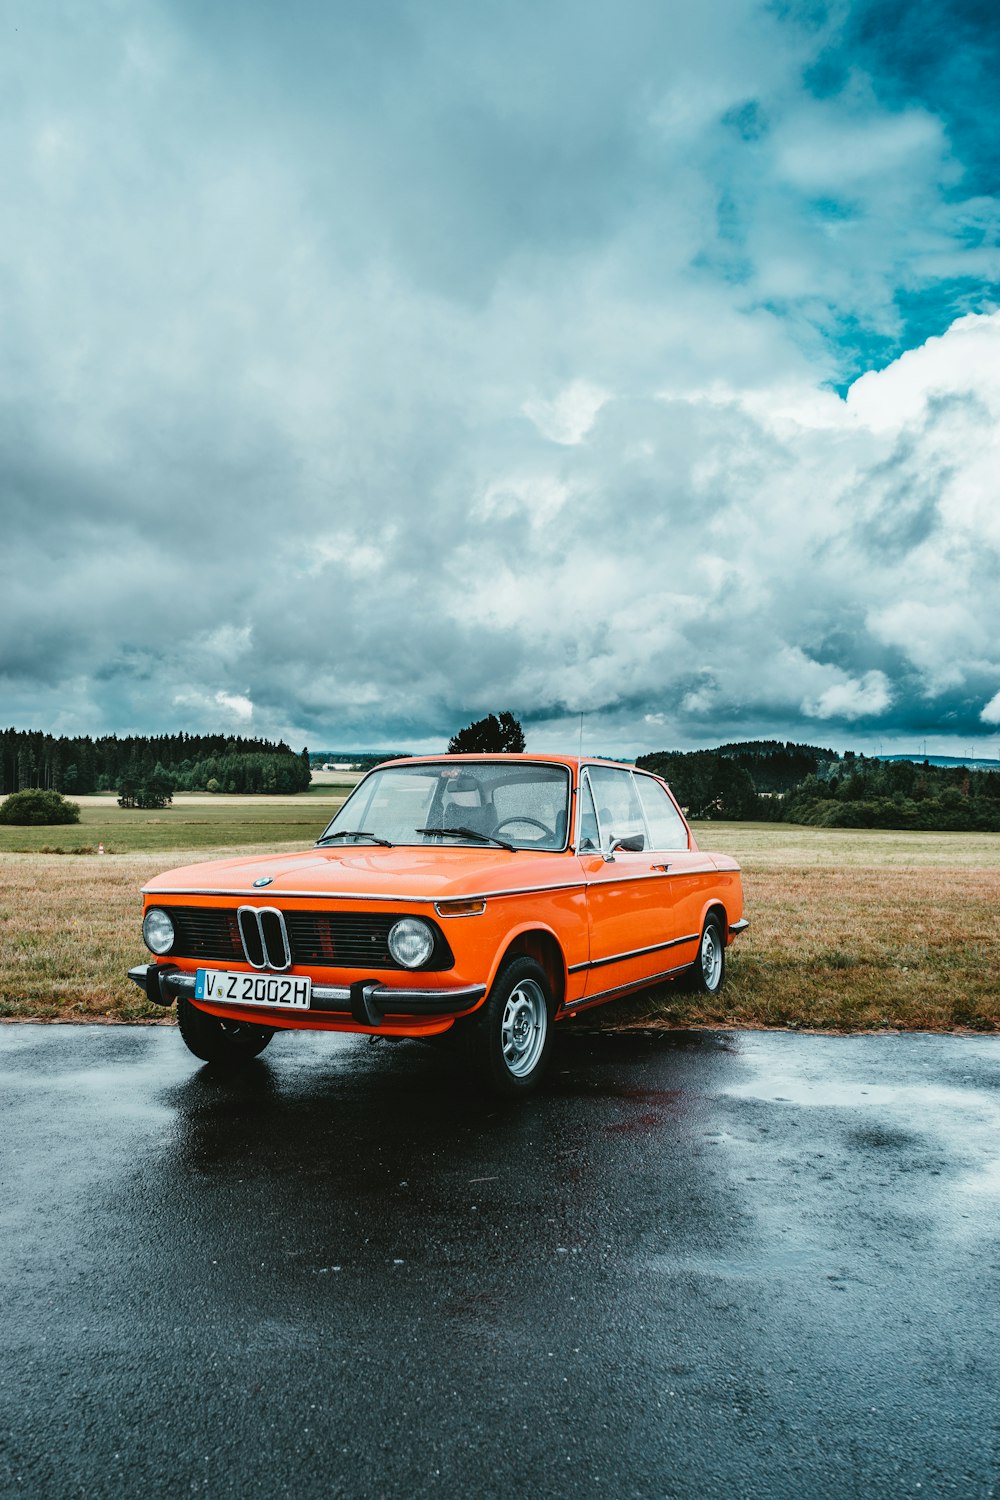 berline BMW orange garée près d’un terrain en herbe